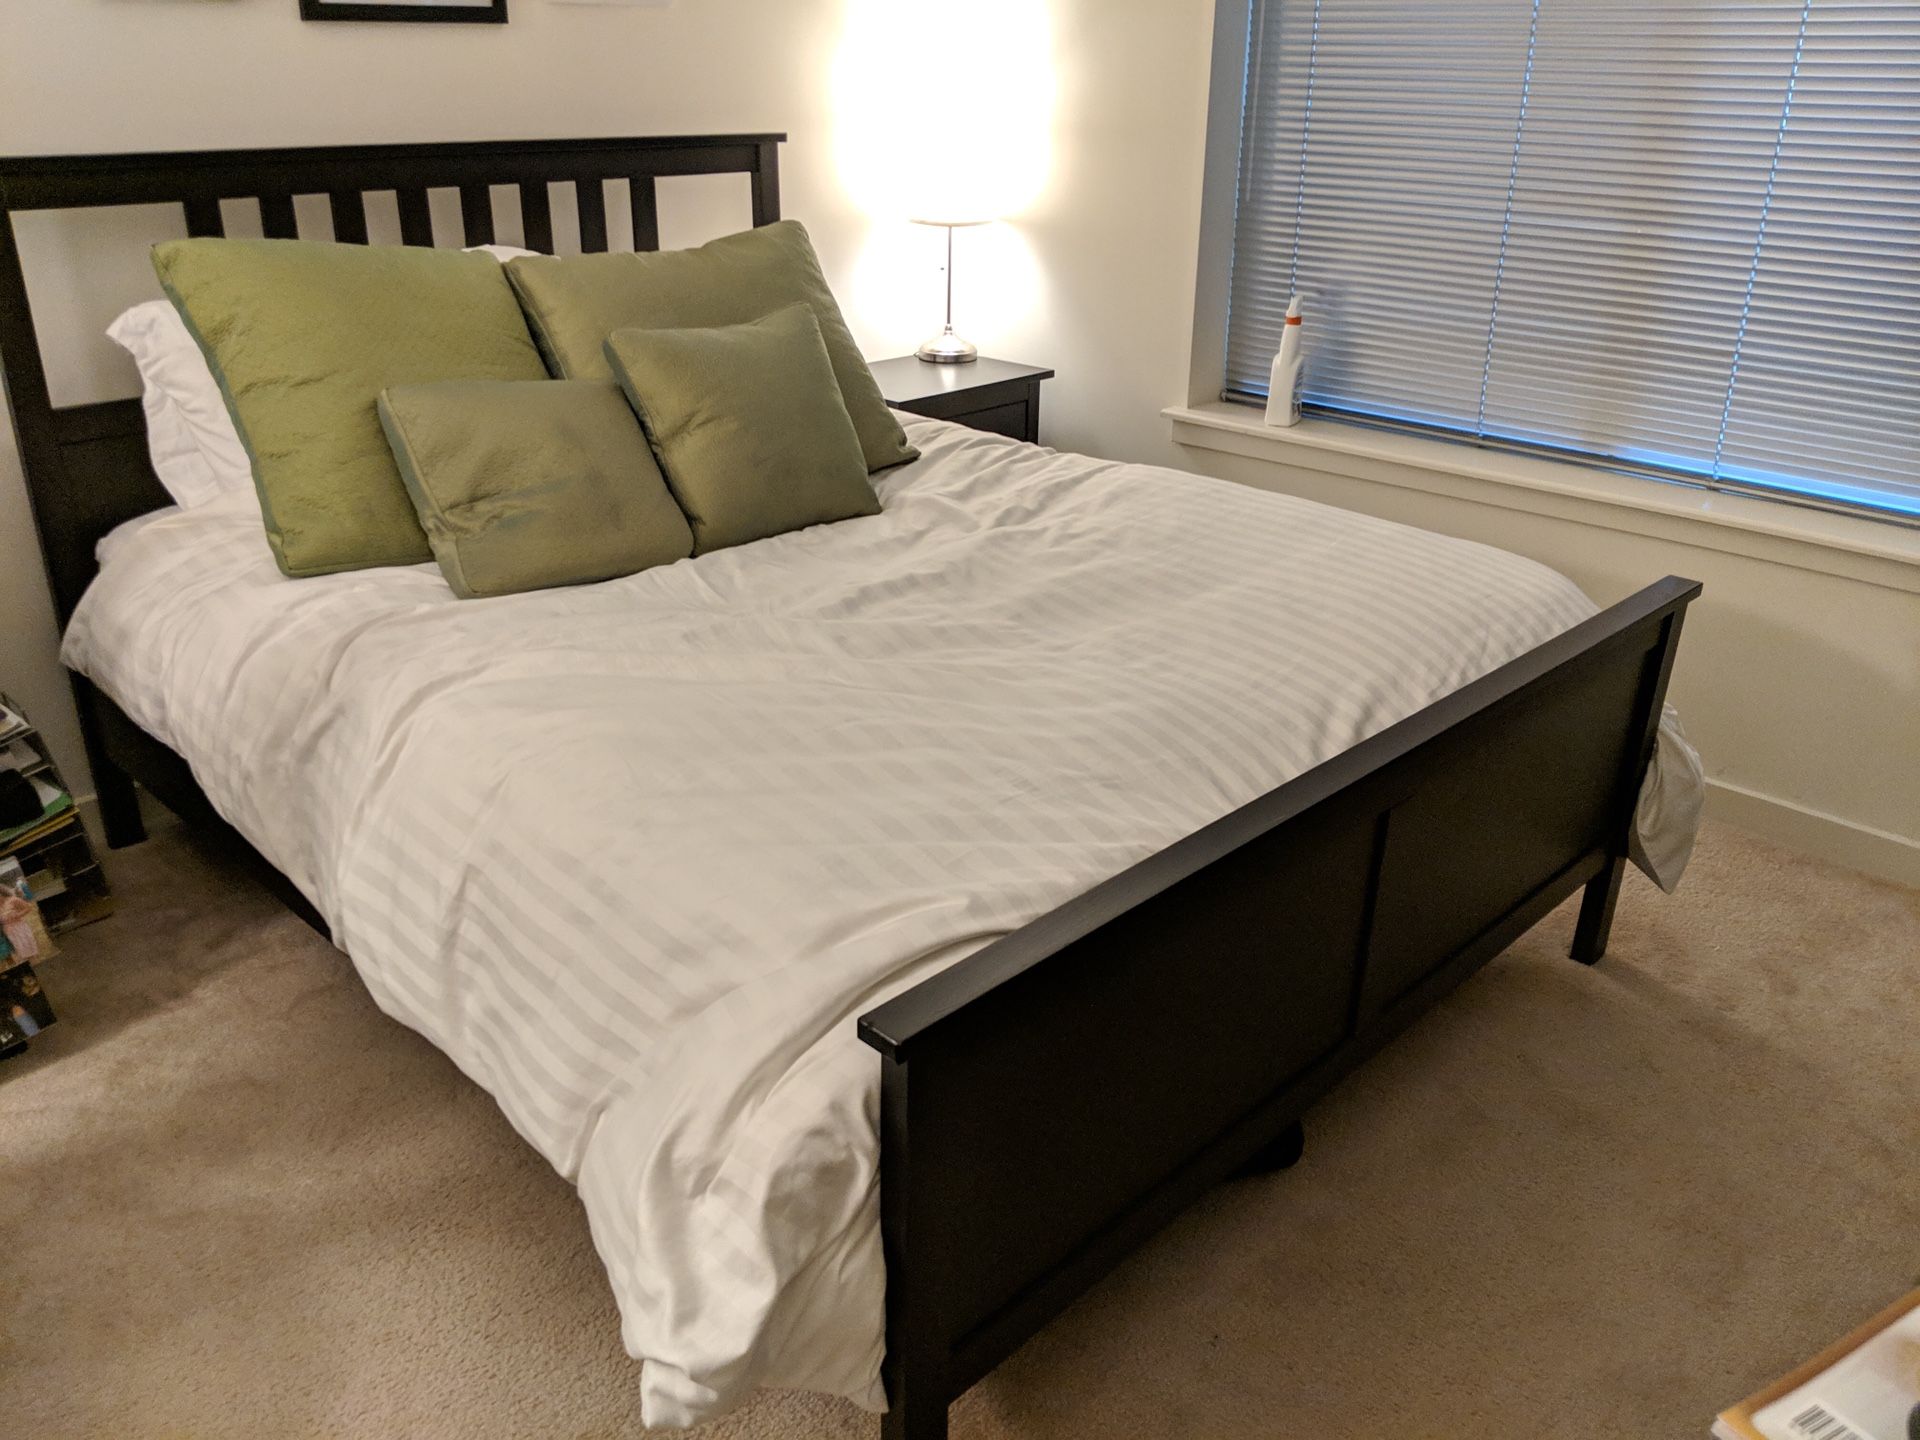 Bedroom furniture set - Pending Sale